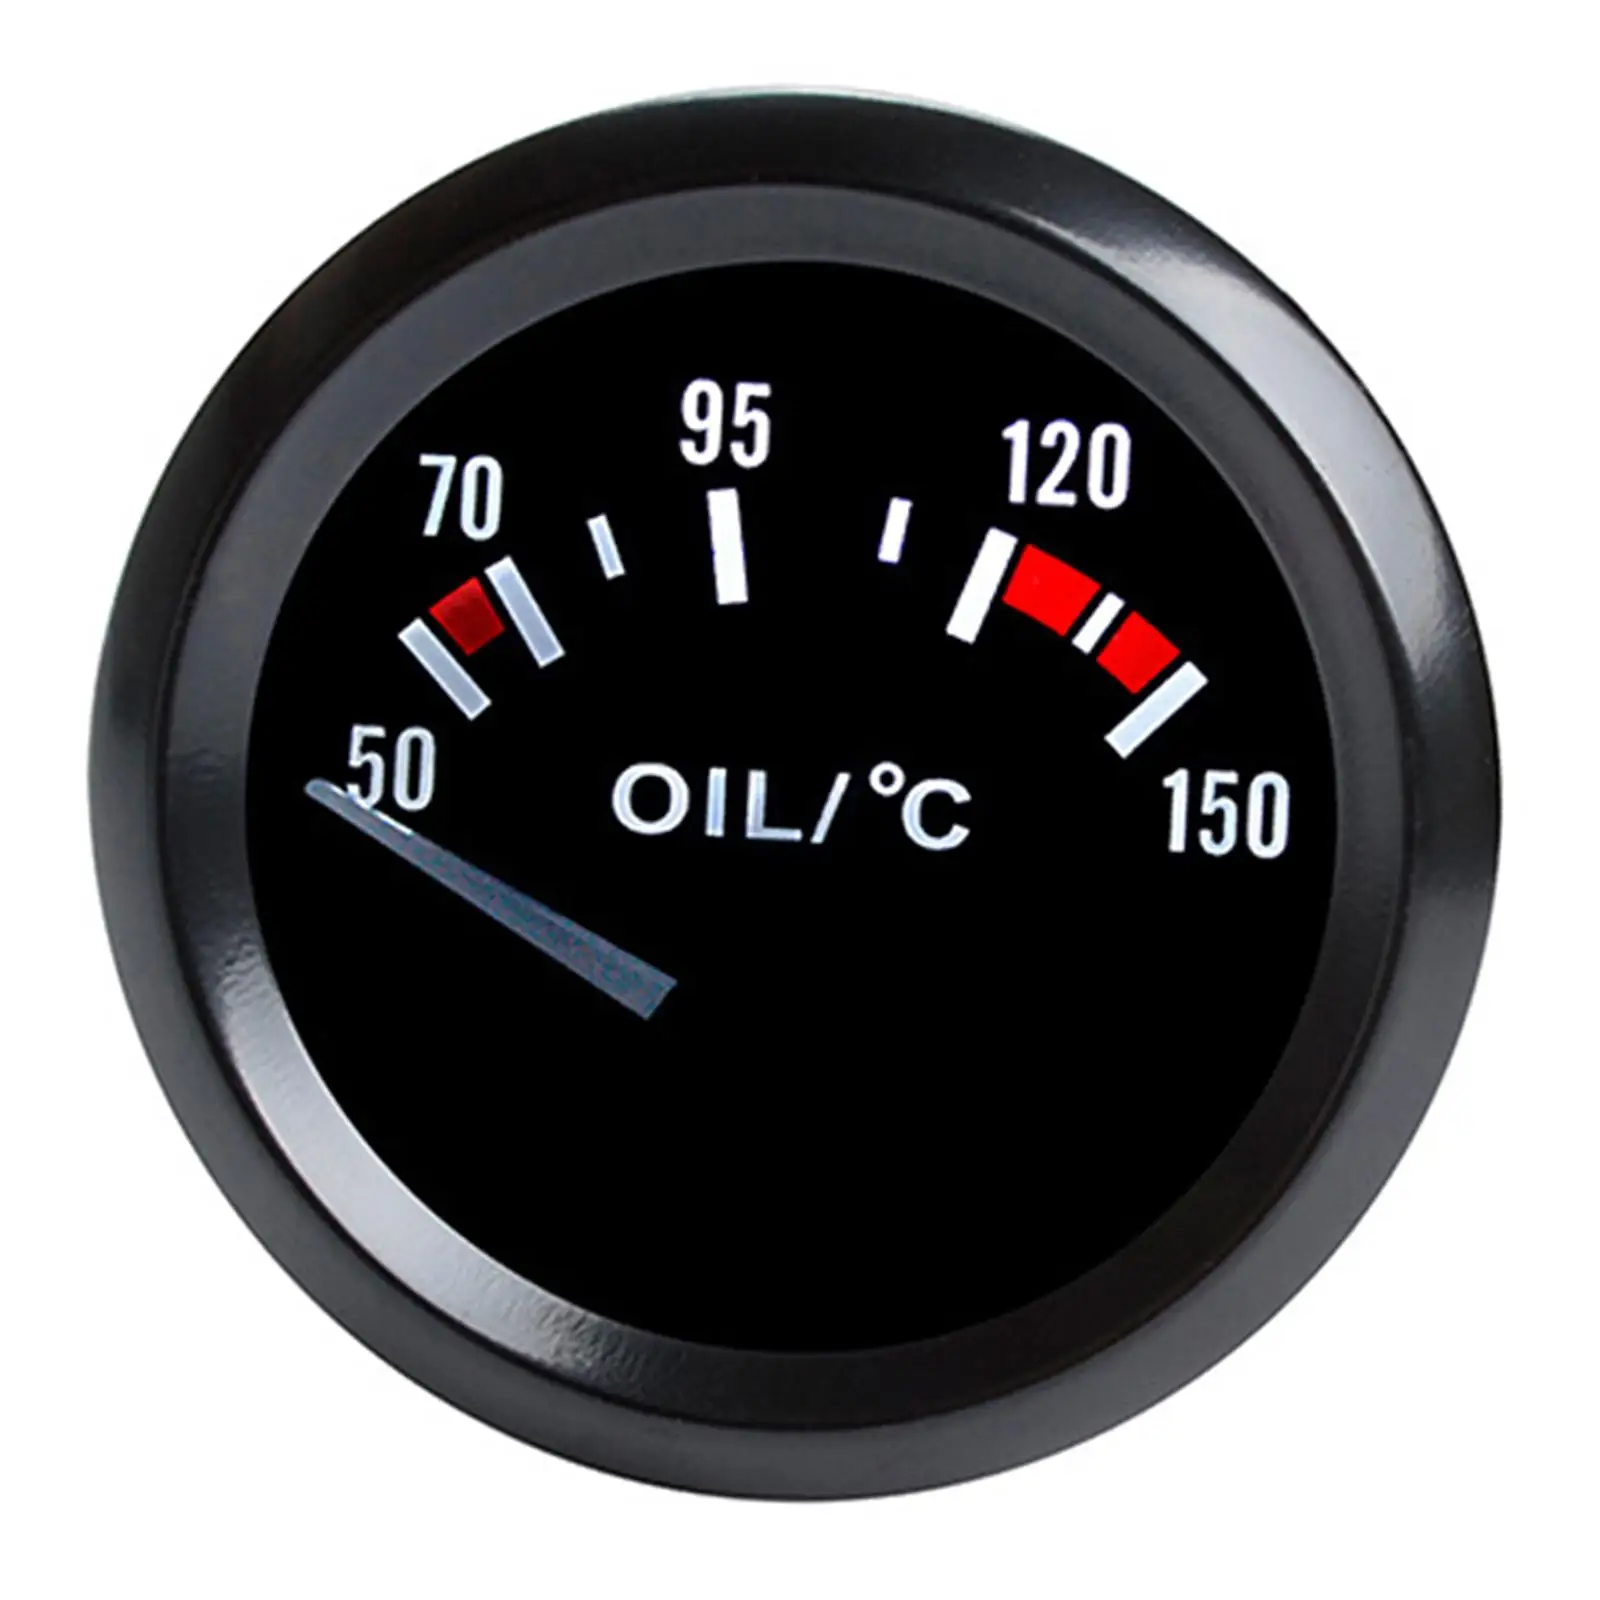 Oil Temp Gauge Replaces LED Display Premium Spare Parts 2 inch Oil Temperature Gauge 52mm for Truck Vehicle Car Automotive